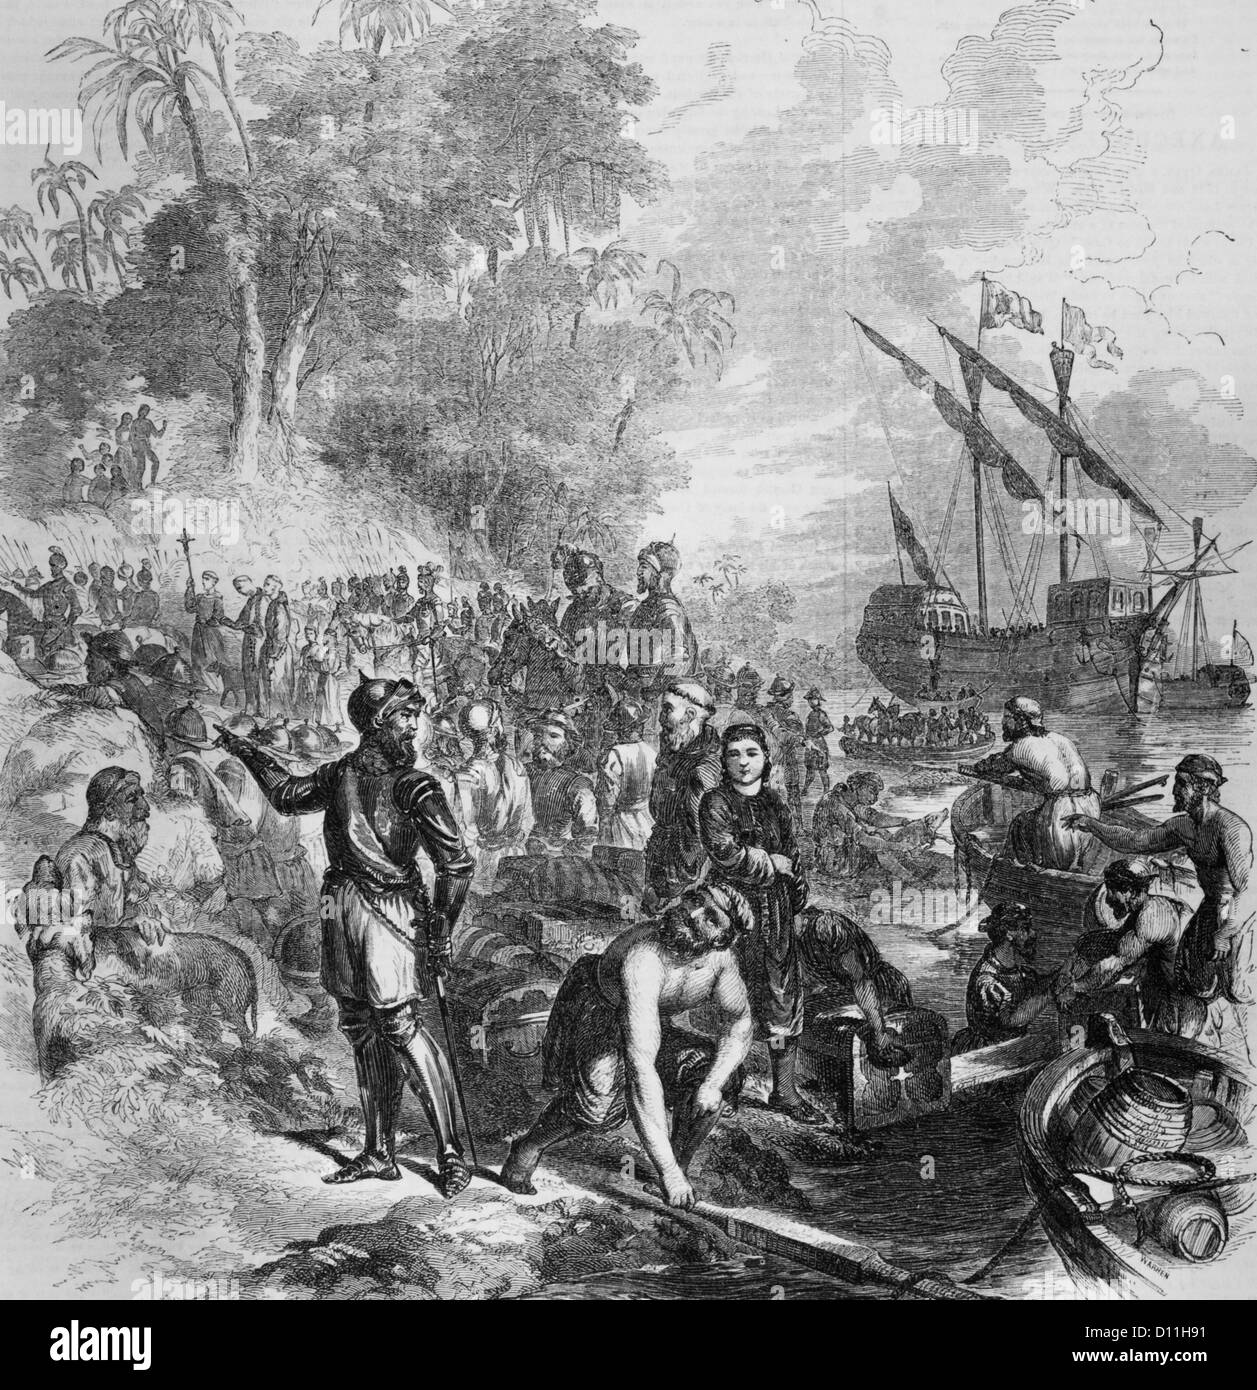 1500s ILLUSTRATION SPANISH EXPLORER HERNANDO DE SOTO LANDING IN FLORIDA MAY 1539 Stock Photo